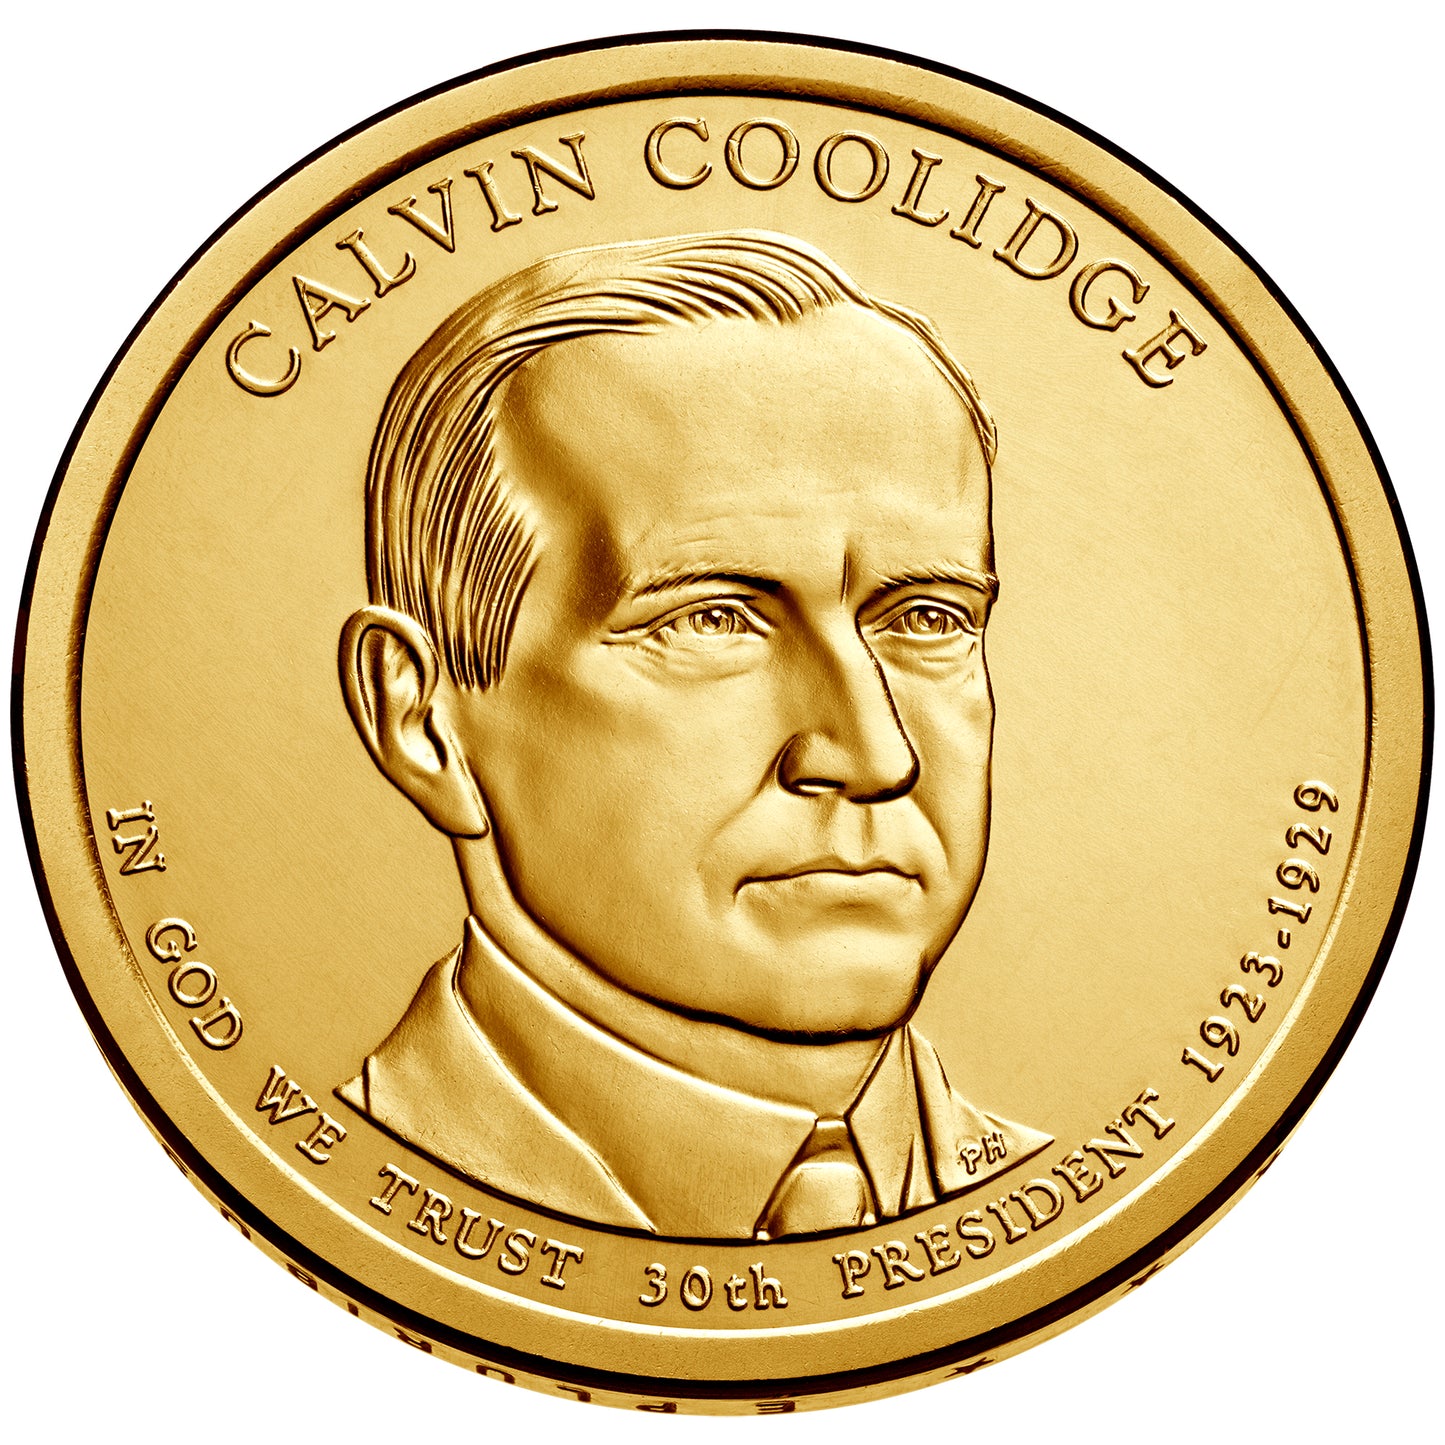 Calvin Coolidge Presidential Dollar Lapel Pin, Uncirculated One Gold Dollar Coin Enamel Pin